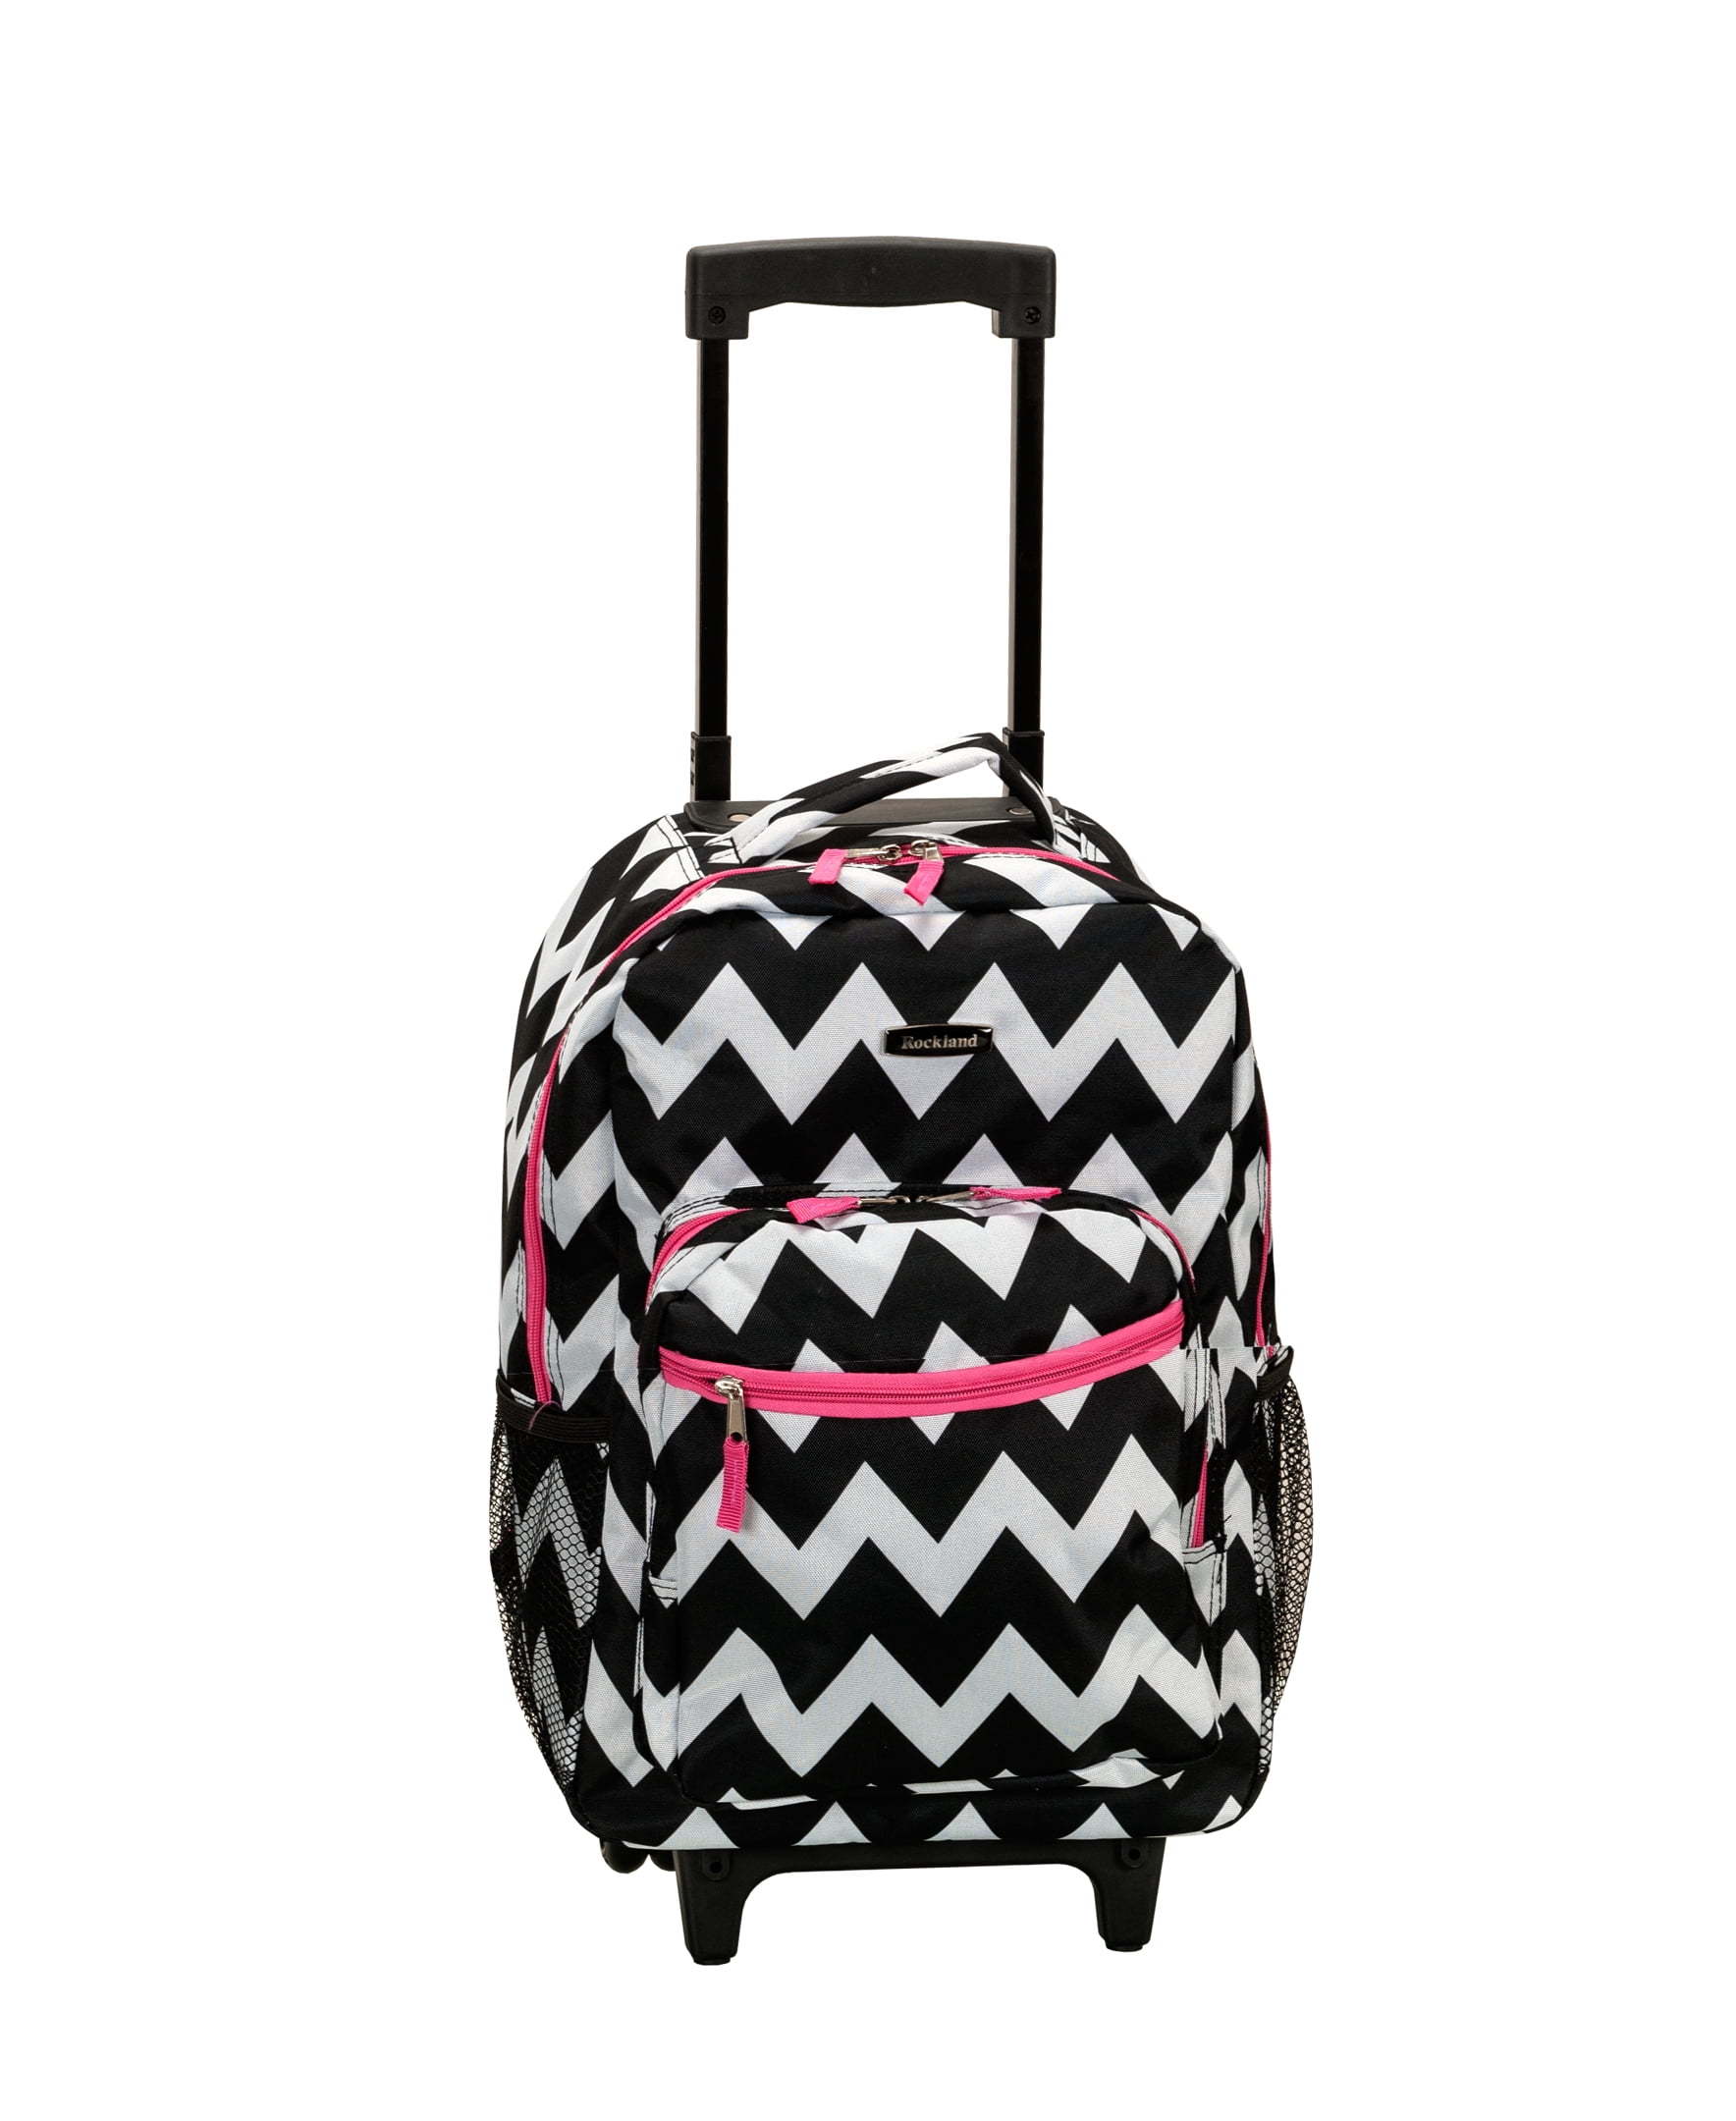 Rockland Luggage 17 Rolling Backpack, Pink Chevron - Walmart.com